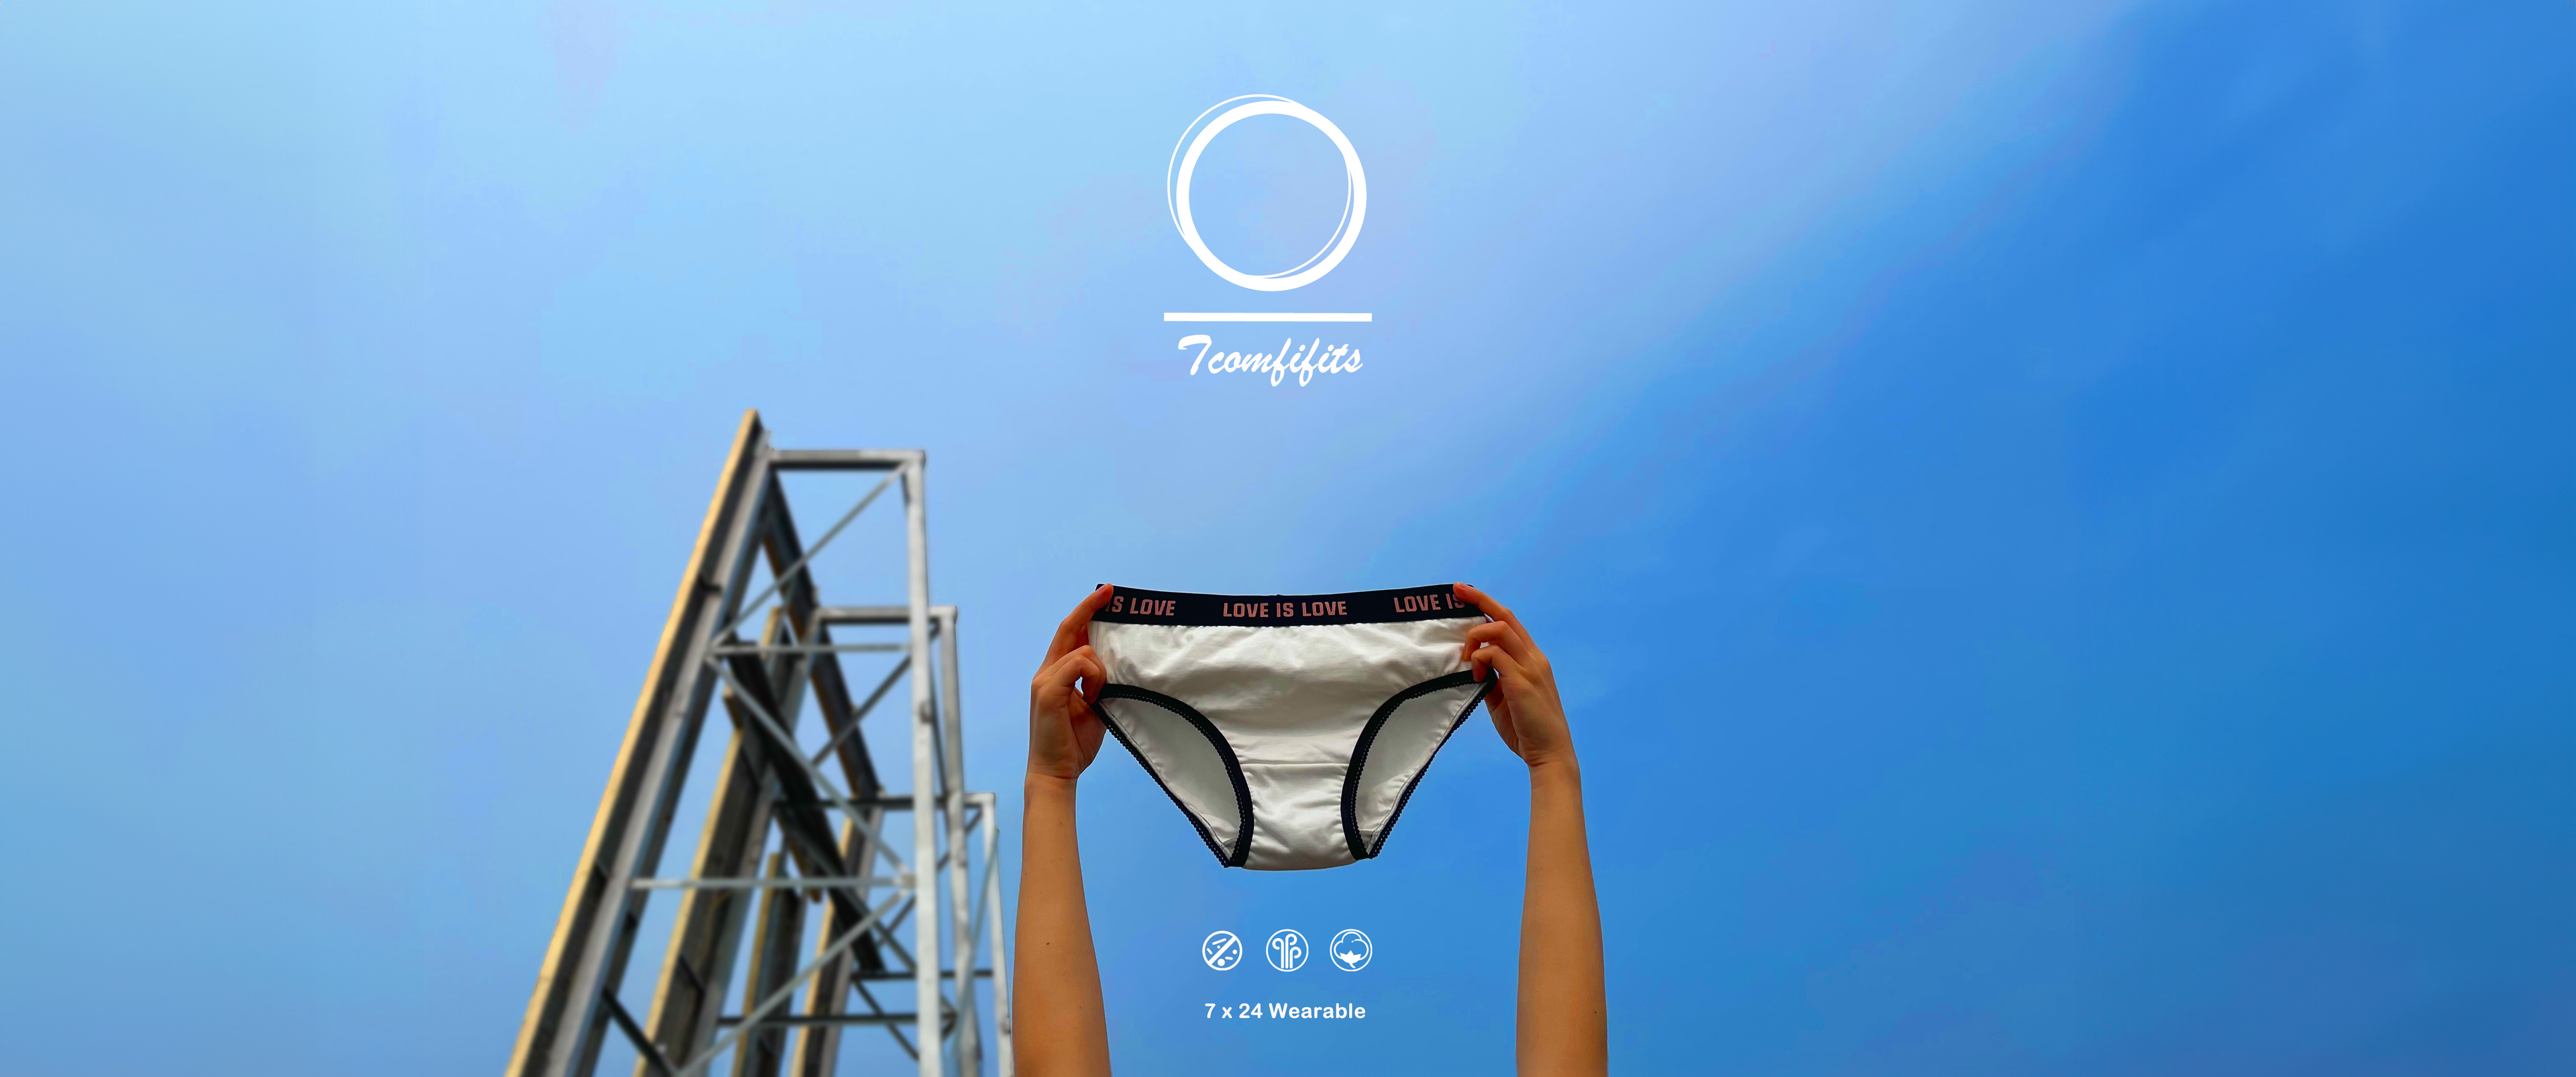 3 Pack) Tucking Underwear Cotton Gaff, for MTF transgender transwomen –  tcomfifits